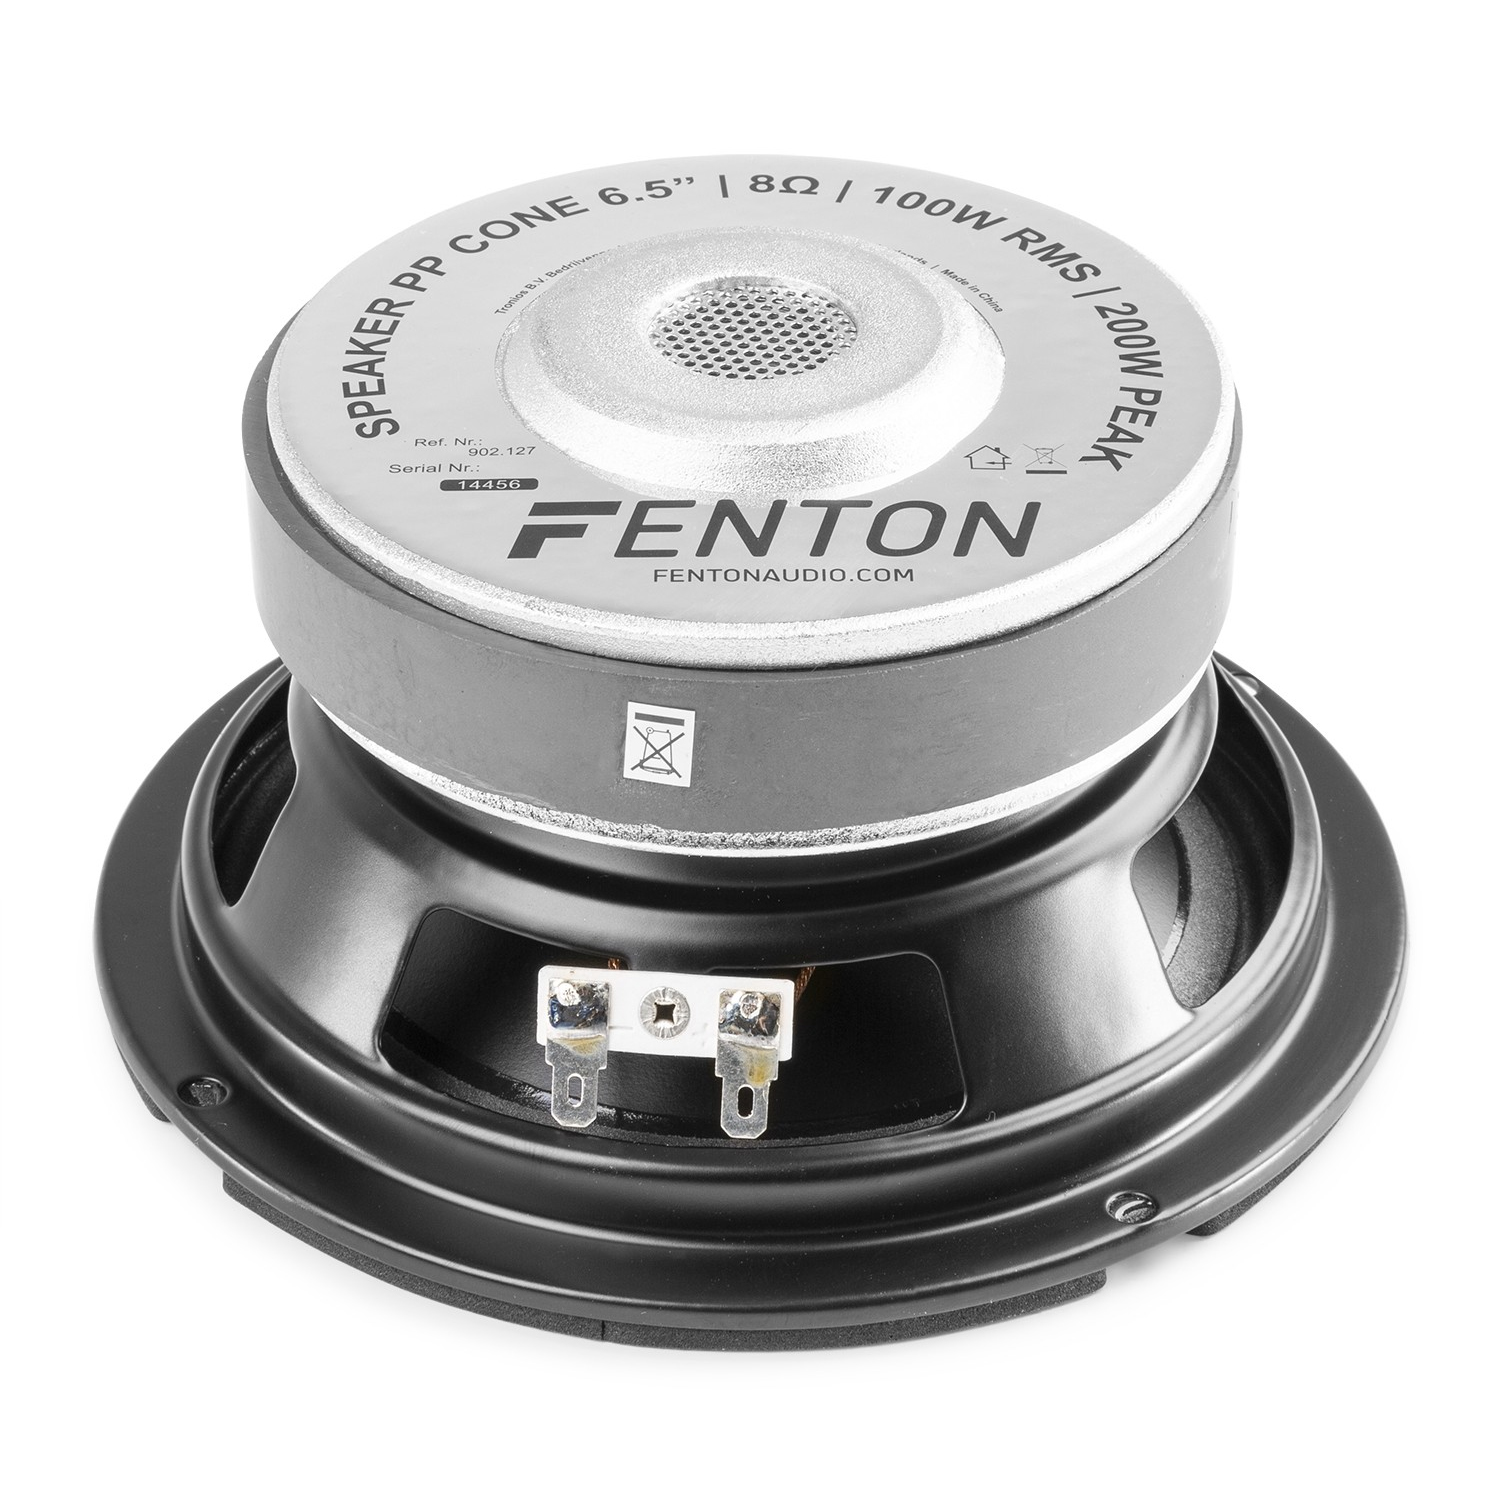 FENTON WP16 Hi Fi Woofer - Mid PP cone / foad edge - 6.5" 200 Watt / 100 Watt RMS 902.127